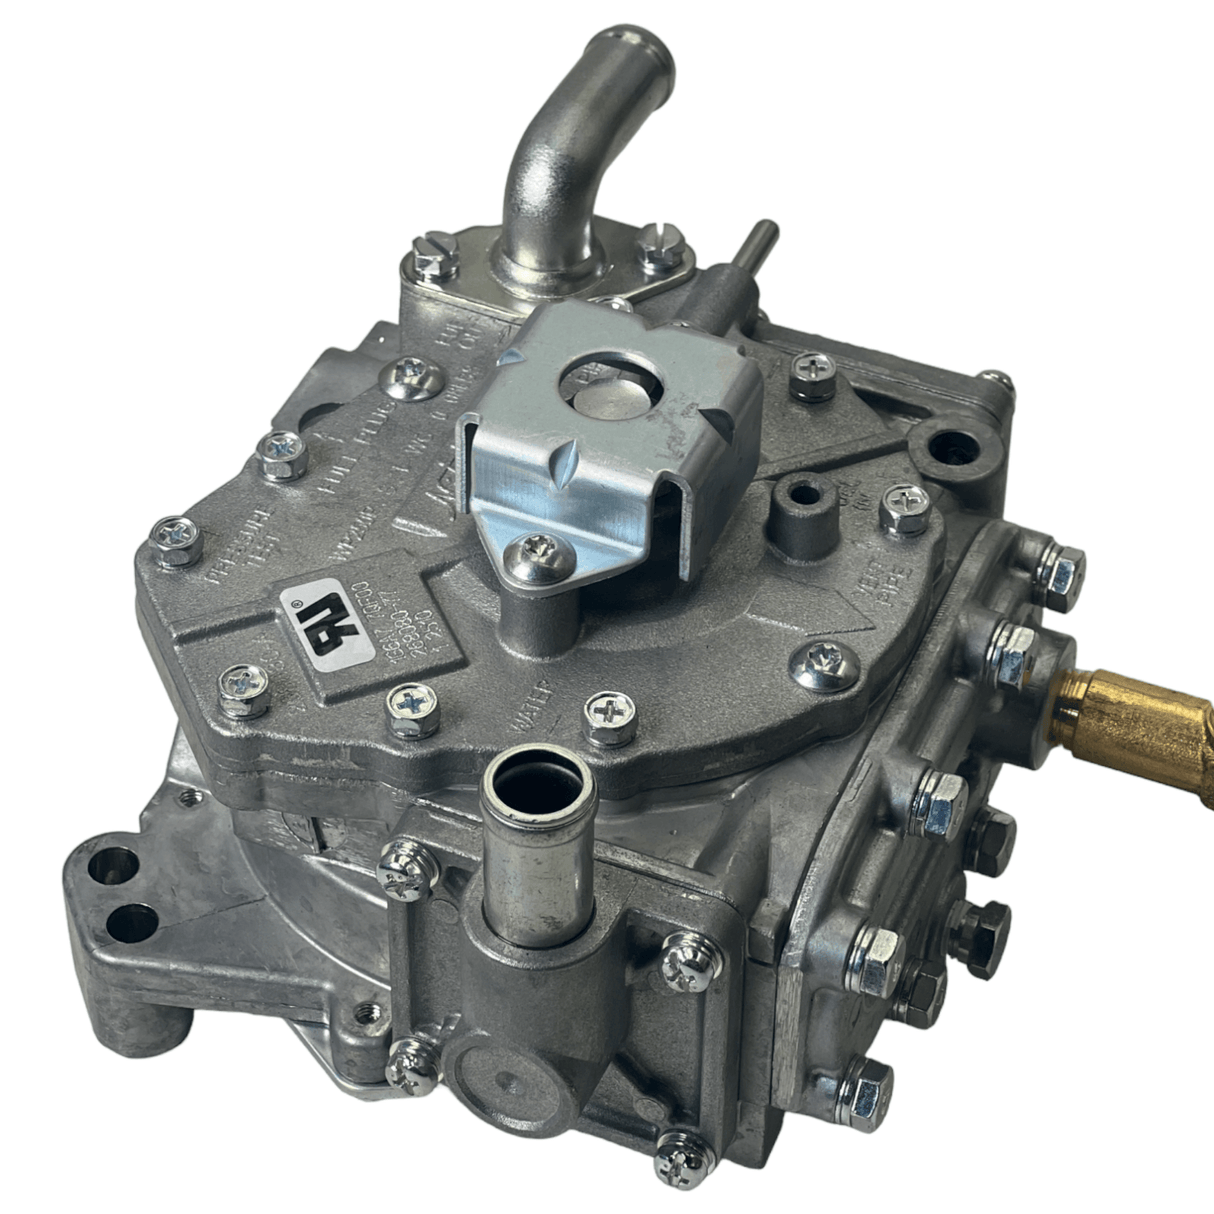 16310GY36D Genuine Komatsu Vaporizer For K21/K25 Engines.